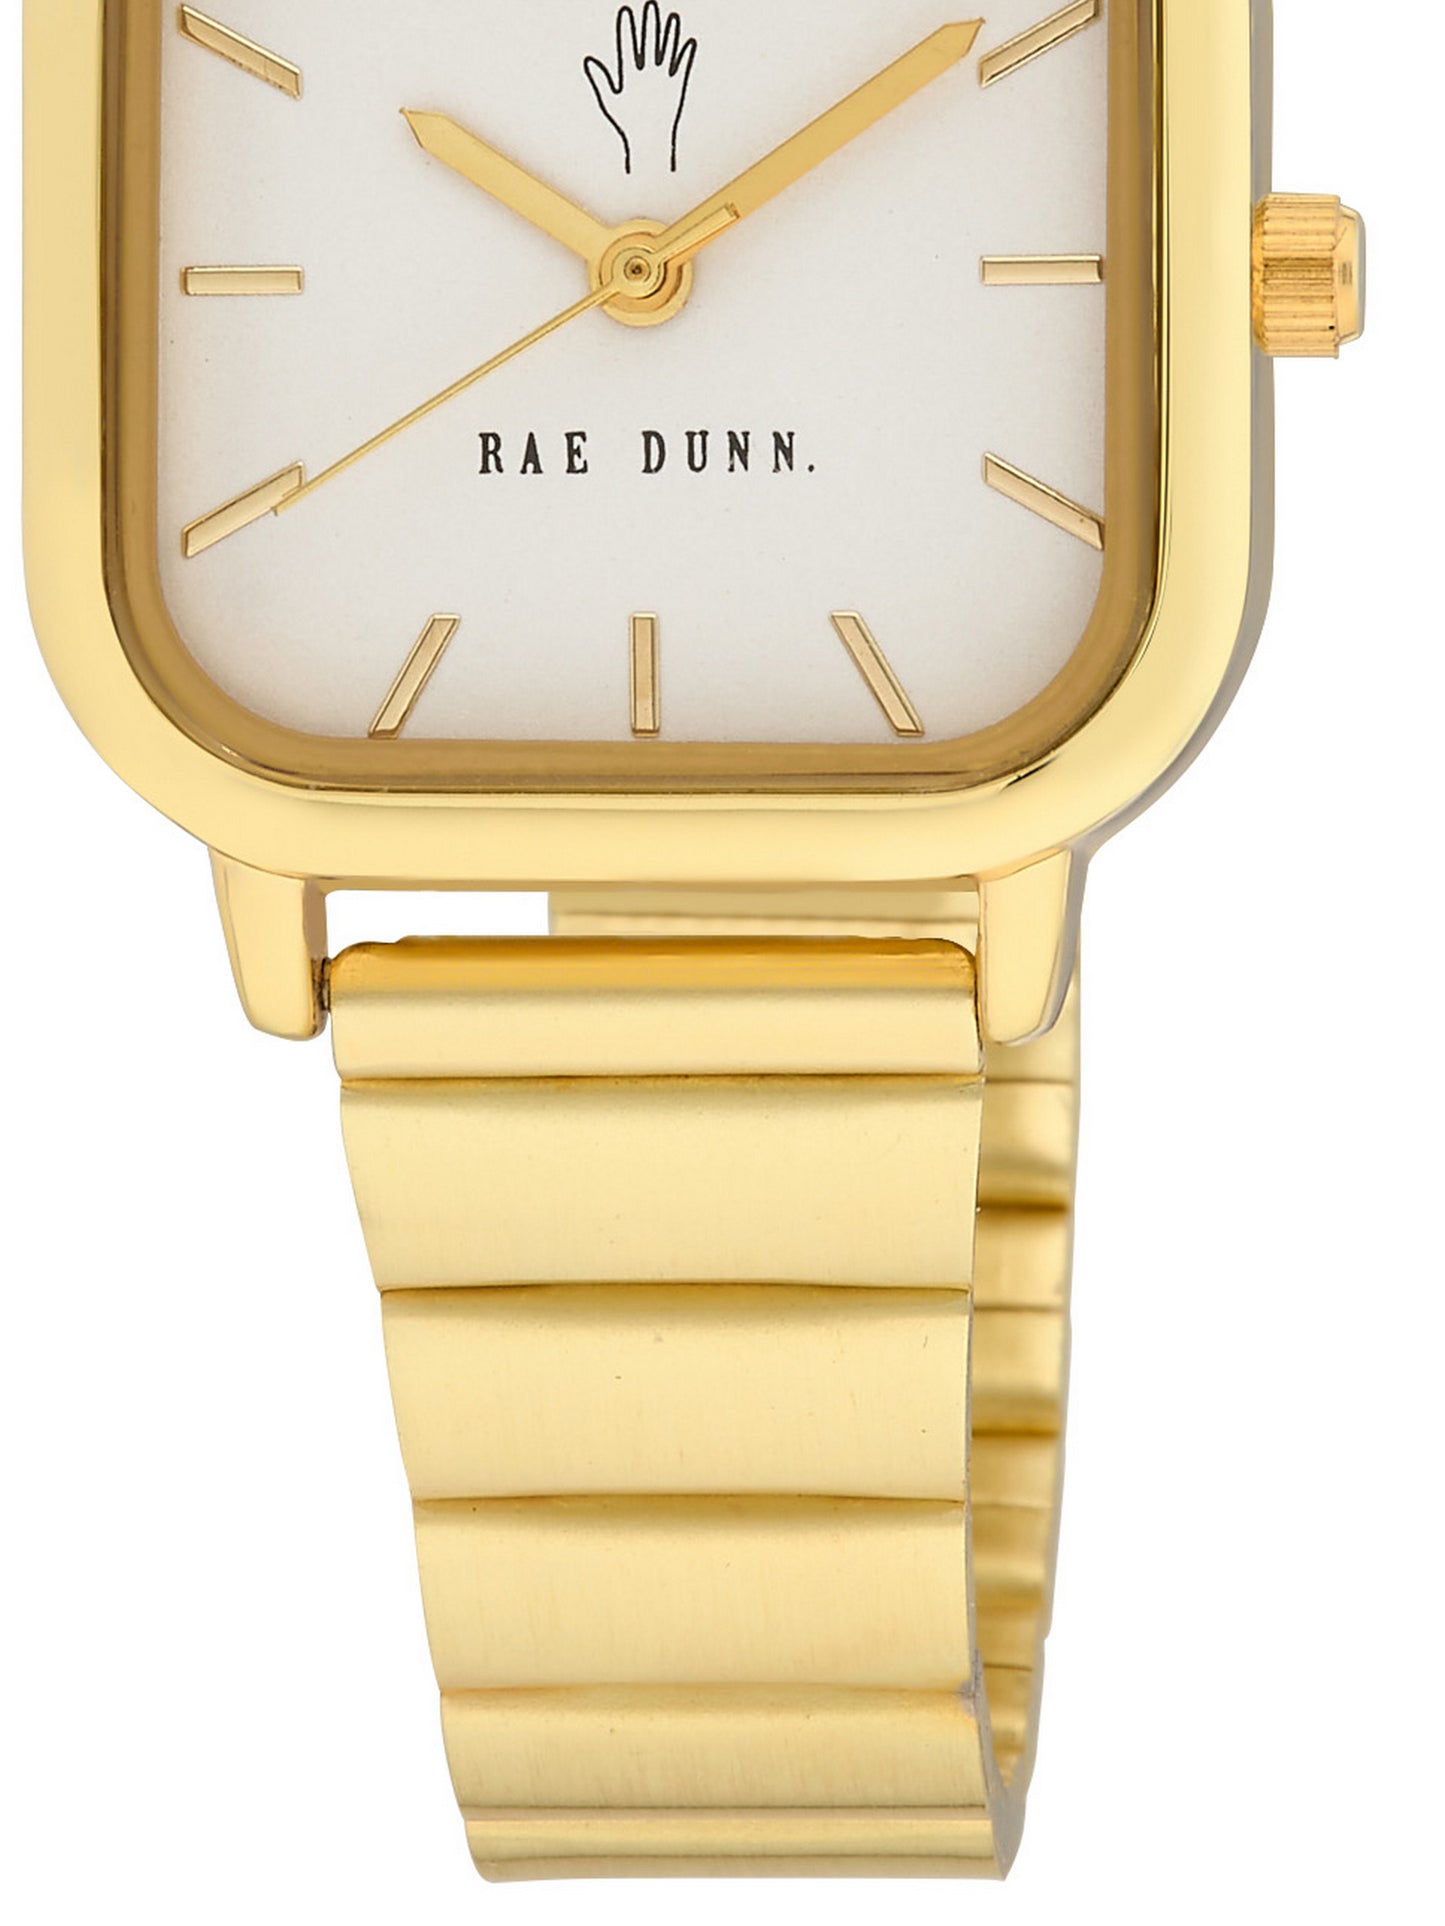 LUNA Square Face Gilded Bracelet Watch in Gold, 26mm - Rae Dunn Wear - Watch